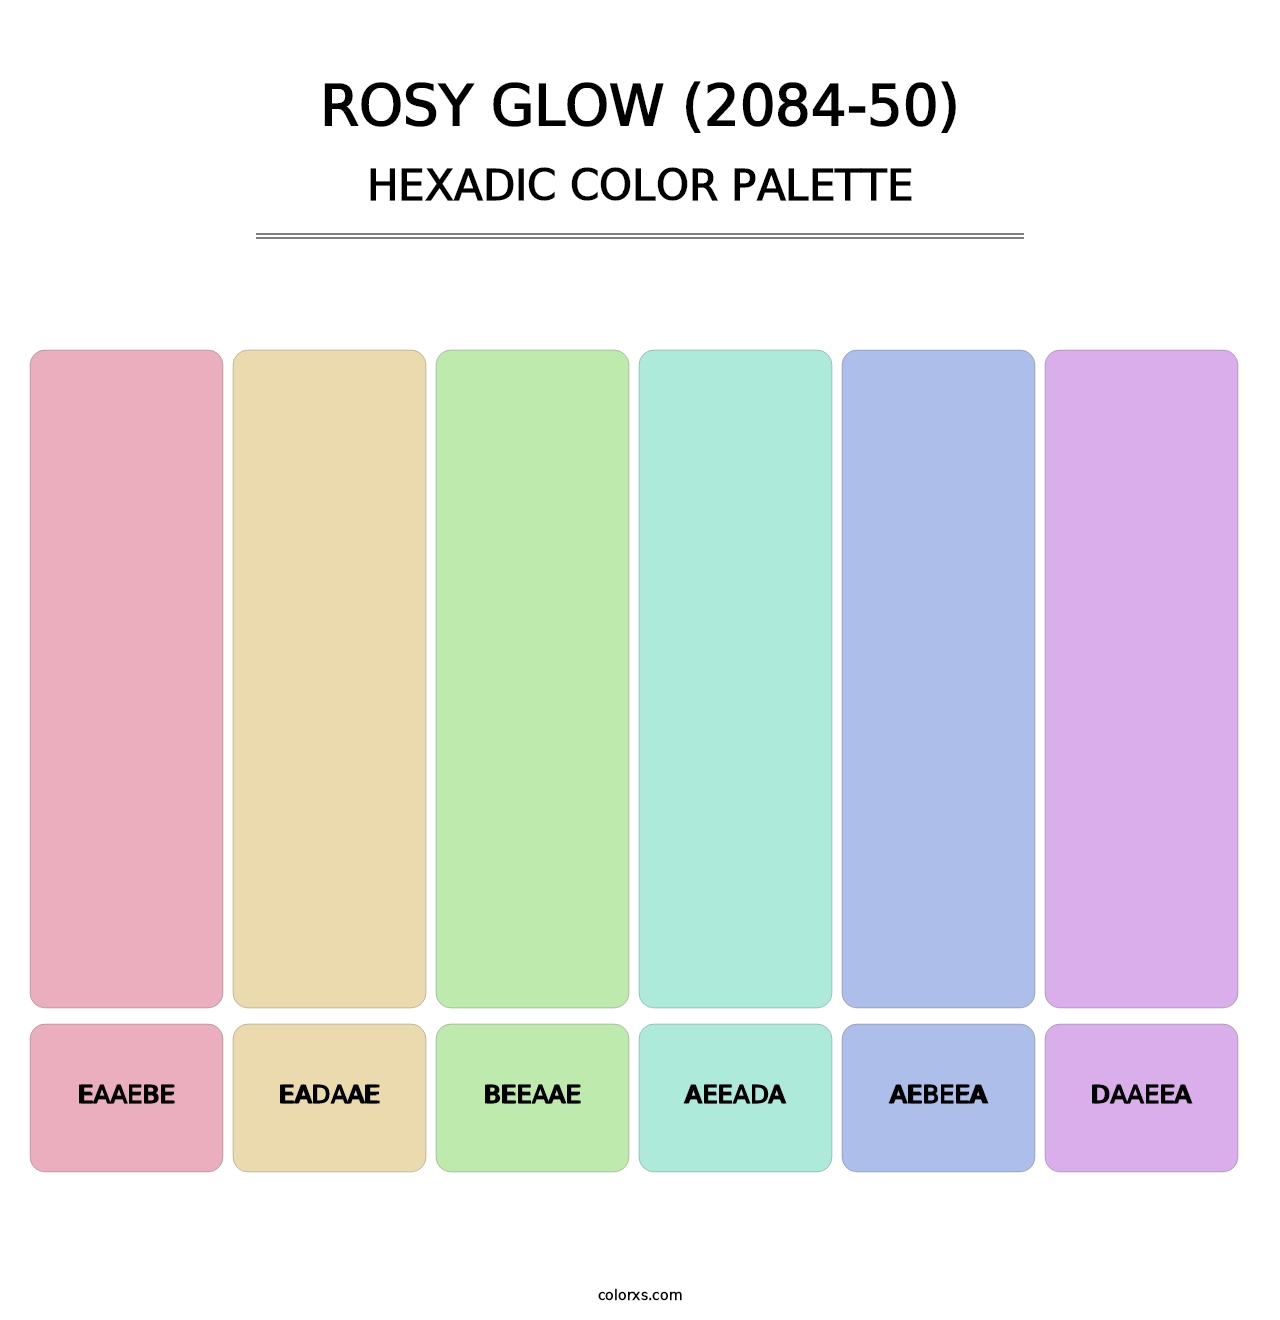 Rosy Glow (2084-50) - Hexadic Color Palette